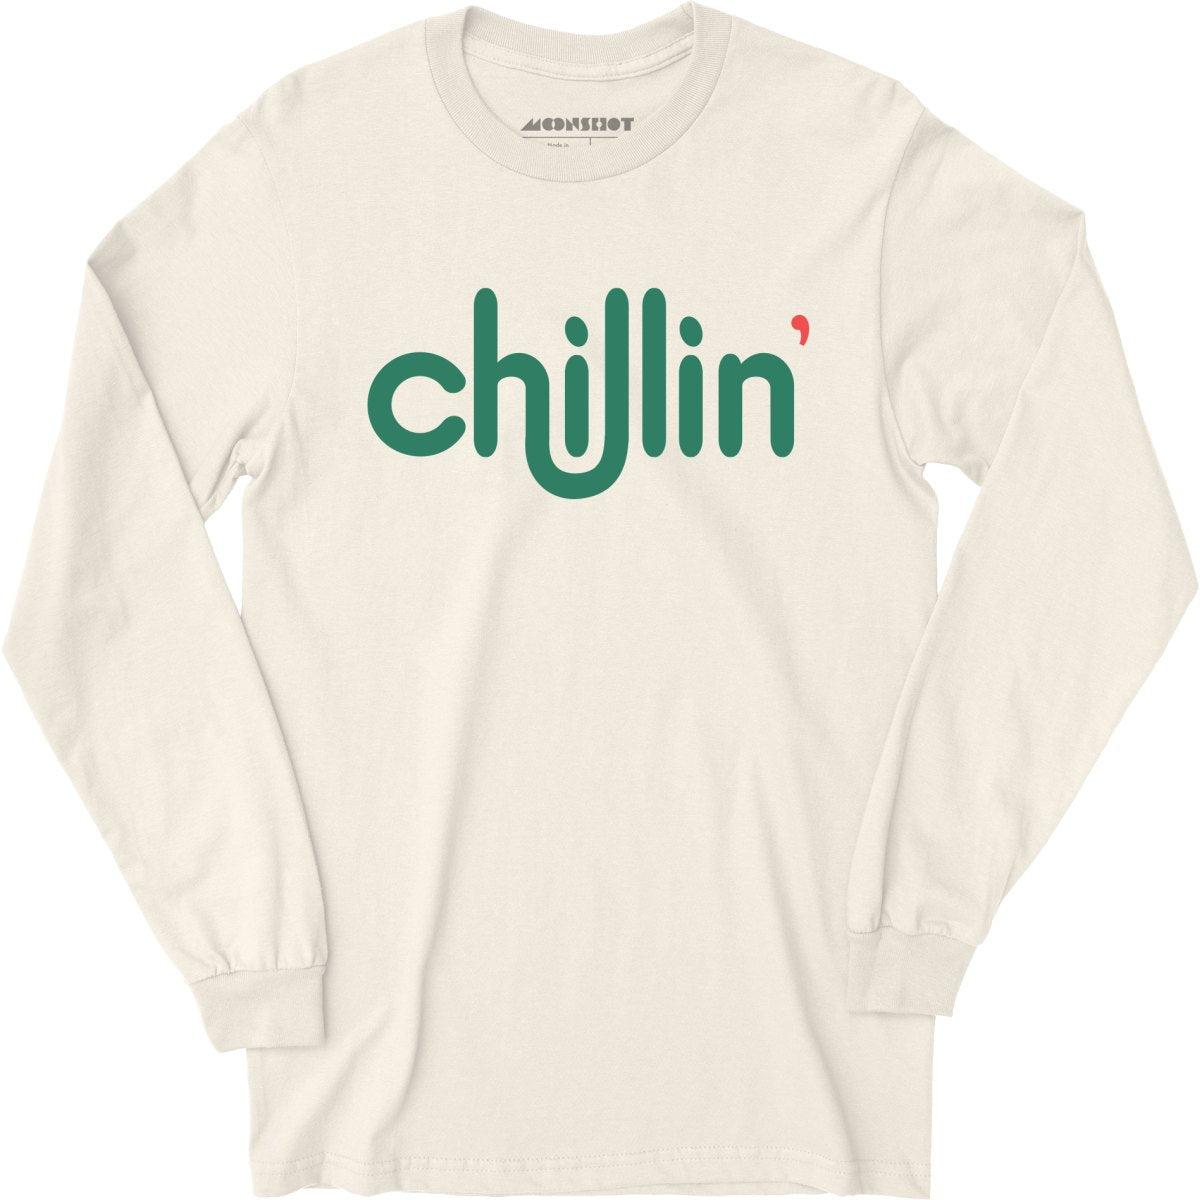 Chillin' - Long Sleeve T-Shirt